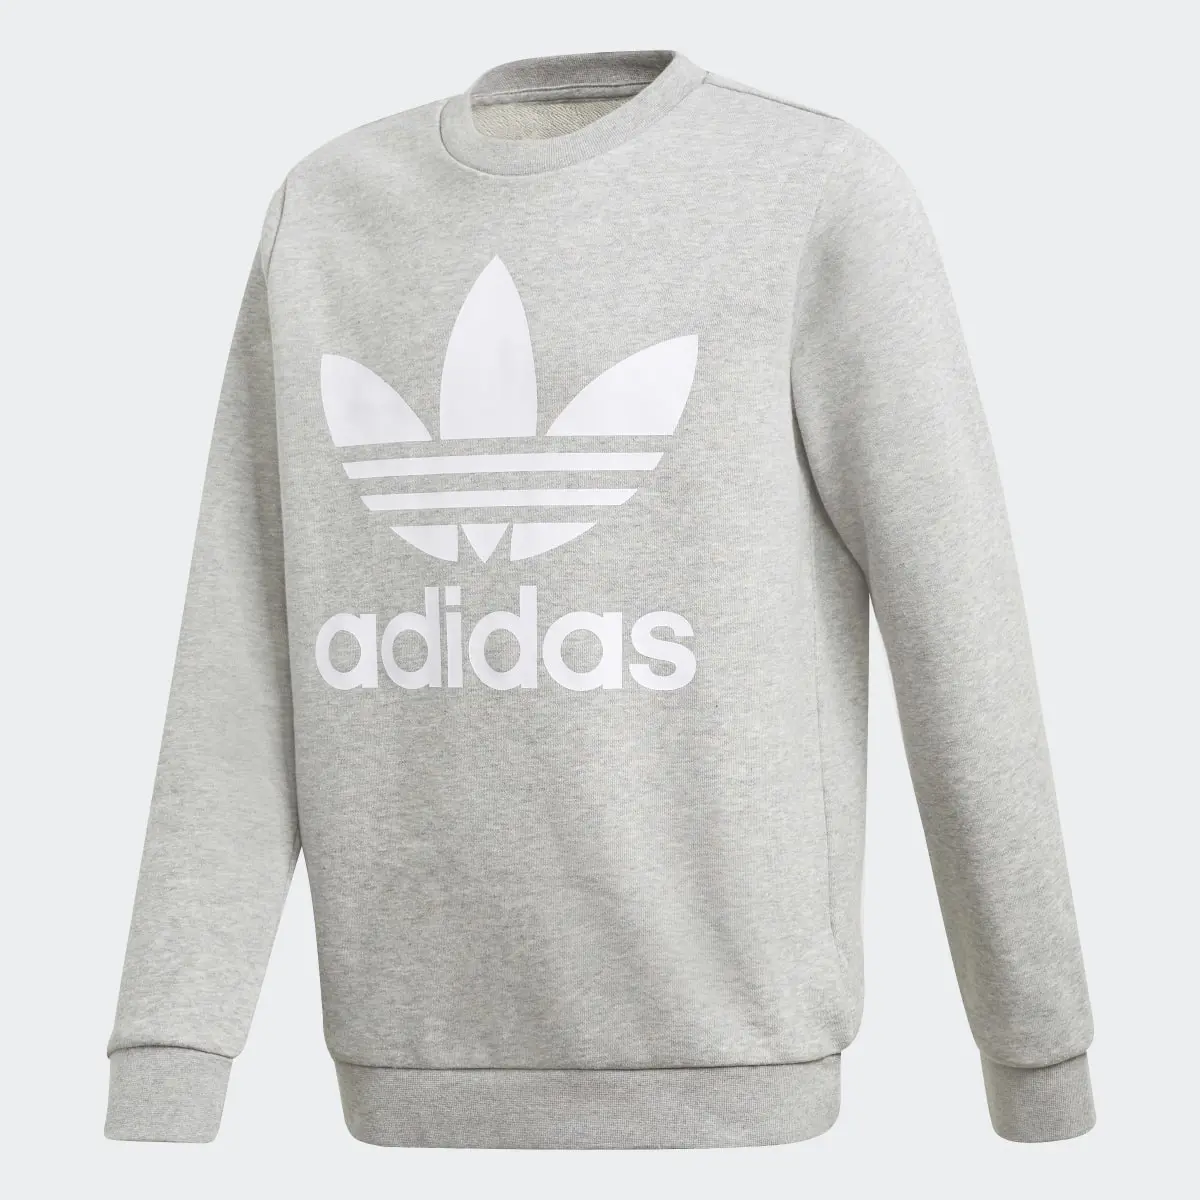 Adidas Trefoil Sweatshirt. 1